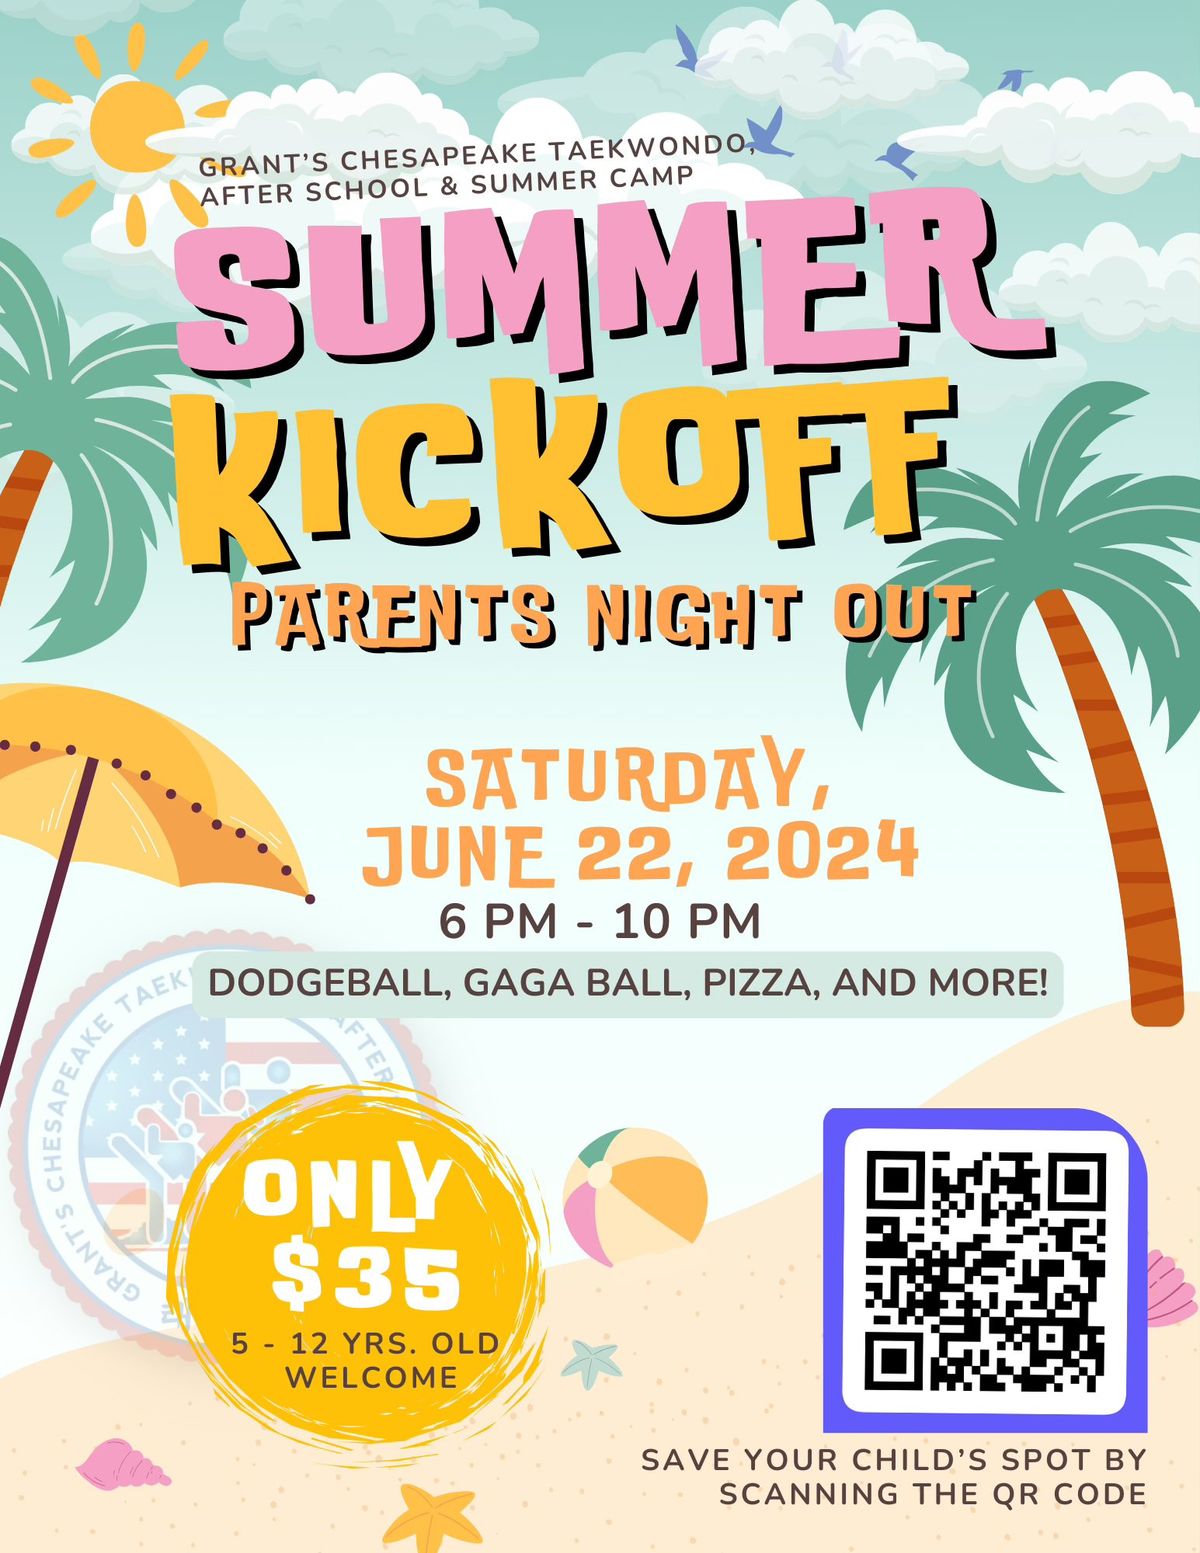 Summer Kickoff Parents Night Out